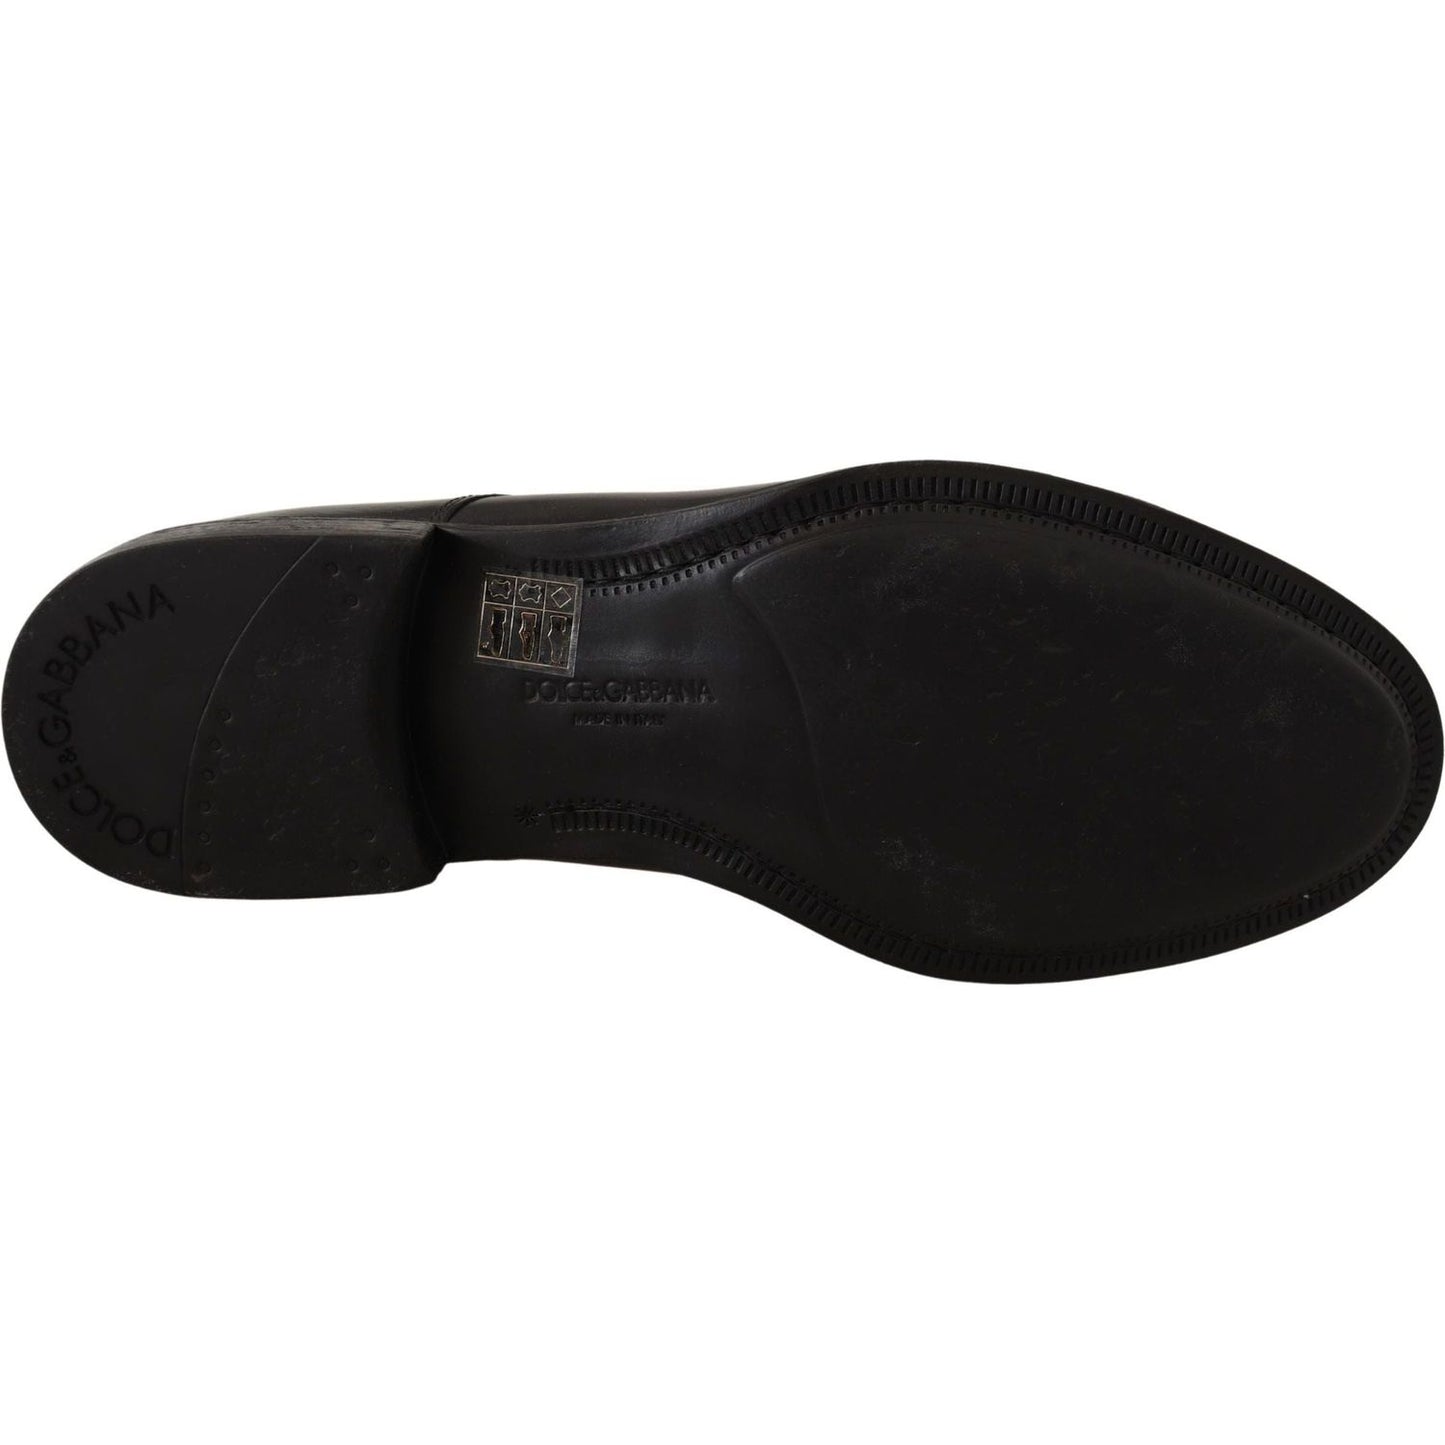 Dolce & Gabbana Elegant Black Leather Formal Derby Shoes black-leather-lace-up-mens-formal-derby-shoes IMG_4947-scaled-1bd52e0e-4c9.jpg